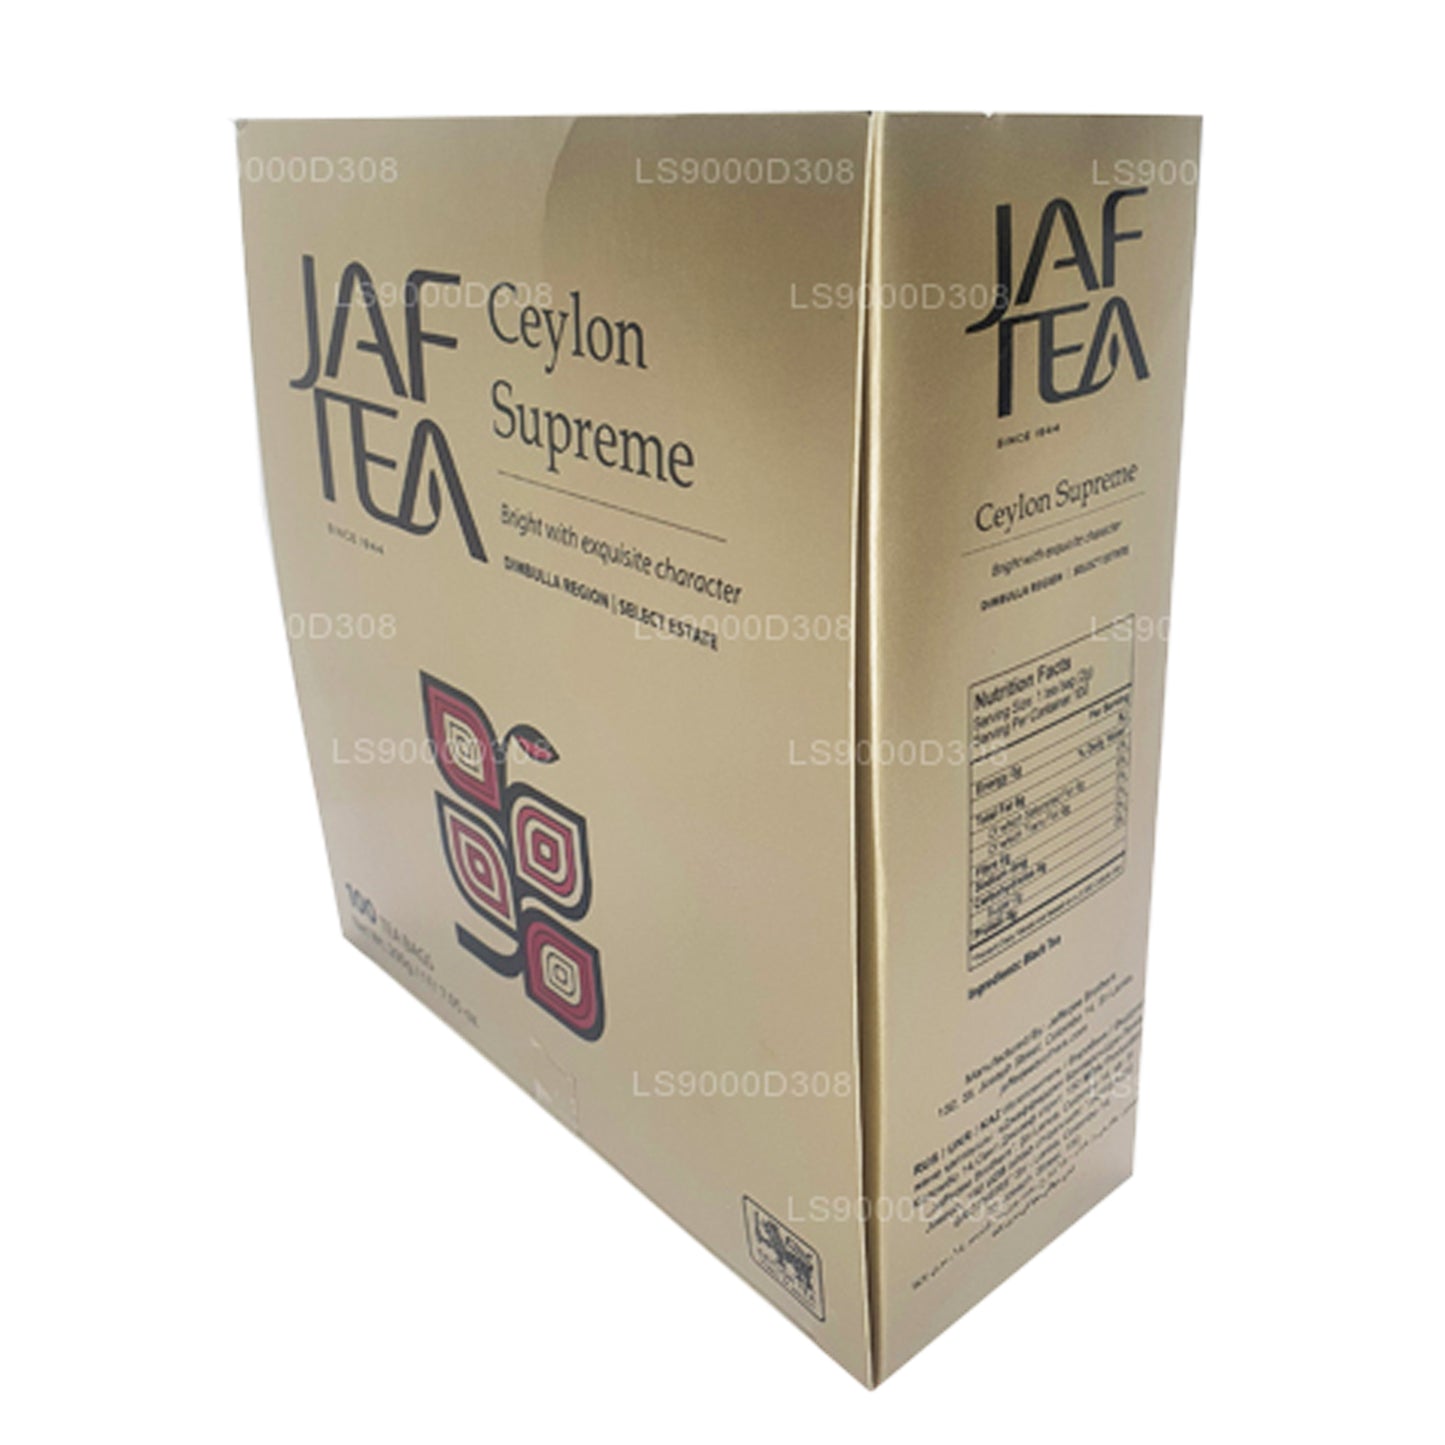 Jaf Tea Classic Gold Collection Ceylon Supreme 100 茶包绳子和标签